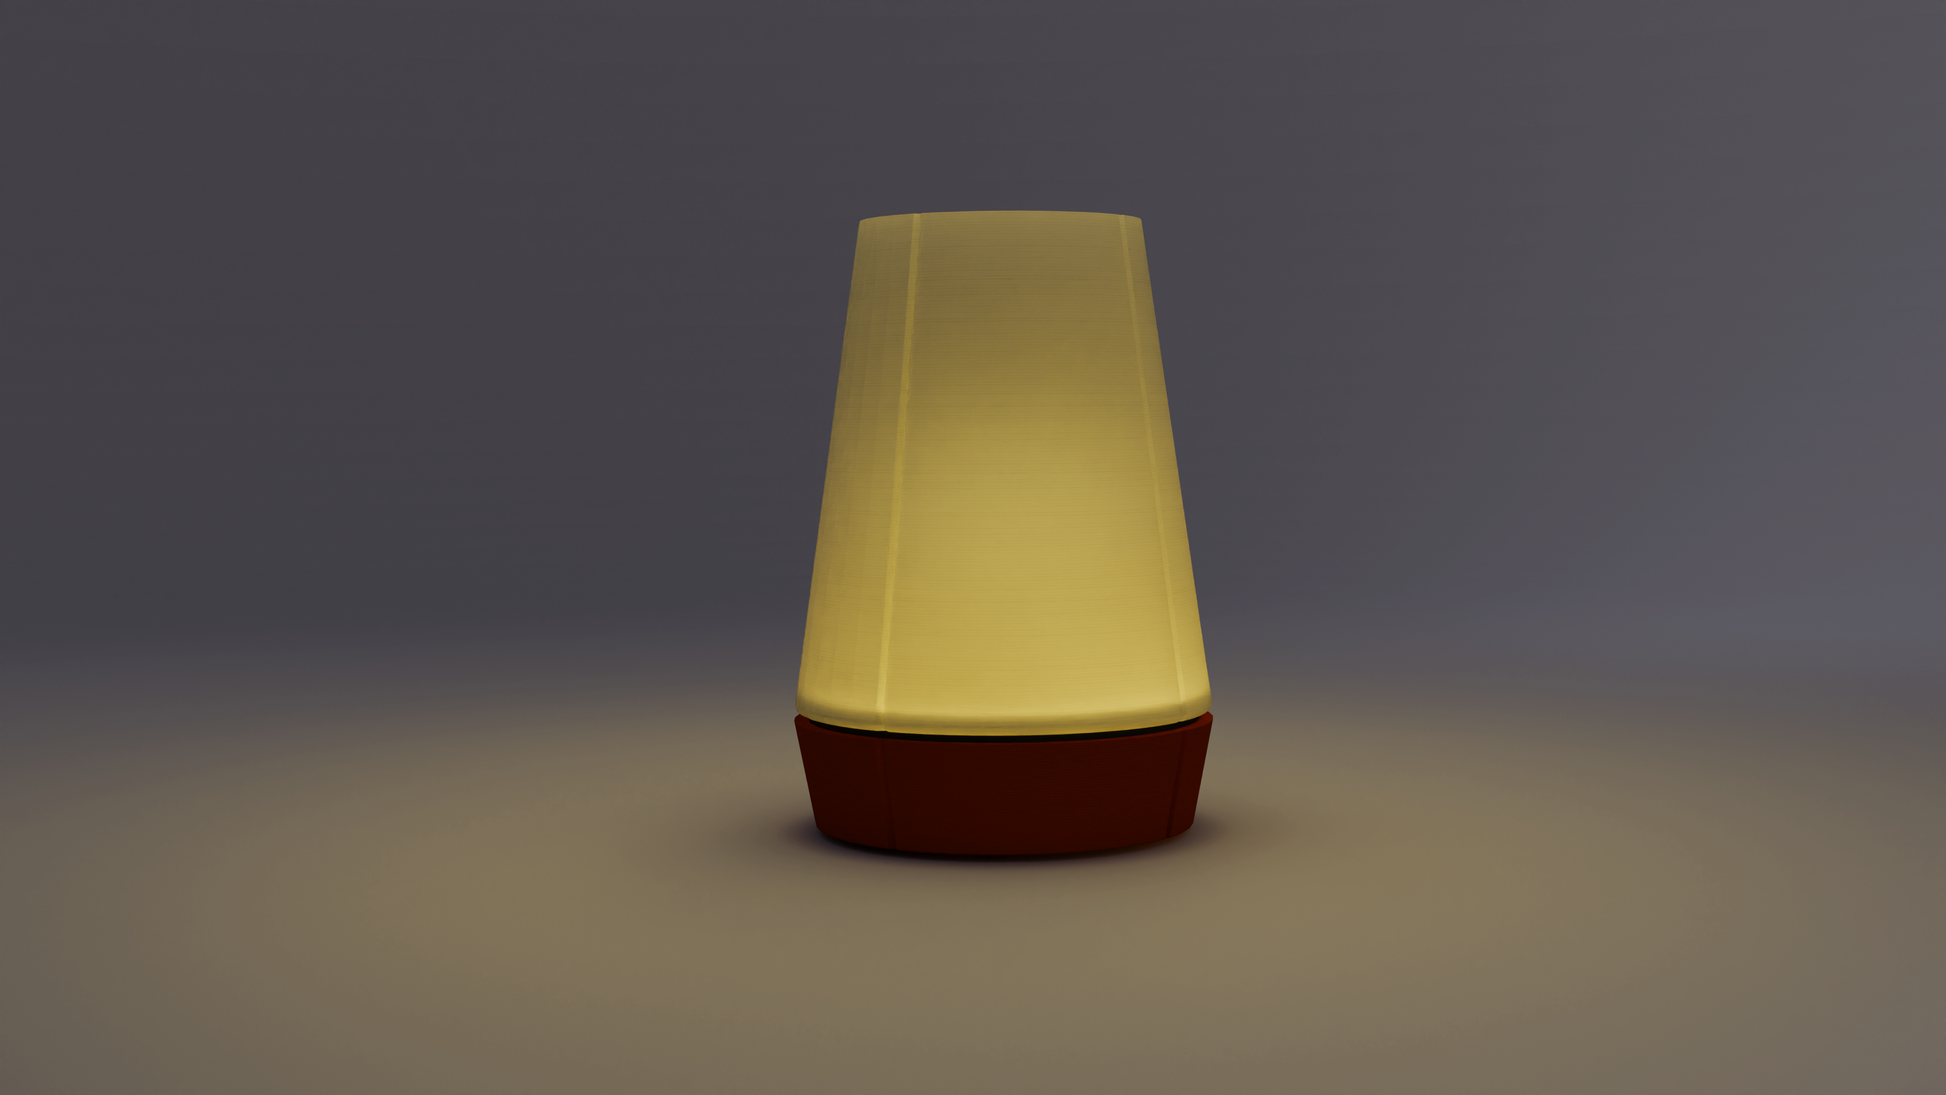 Venti portable lamp offering Scandinavian design and advanced Bluetooth capabilities.